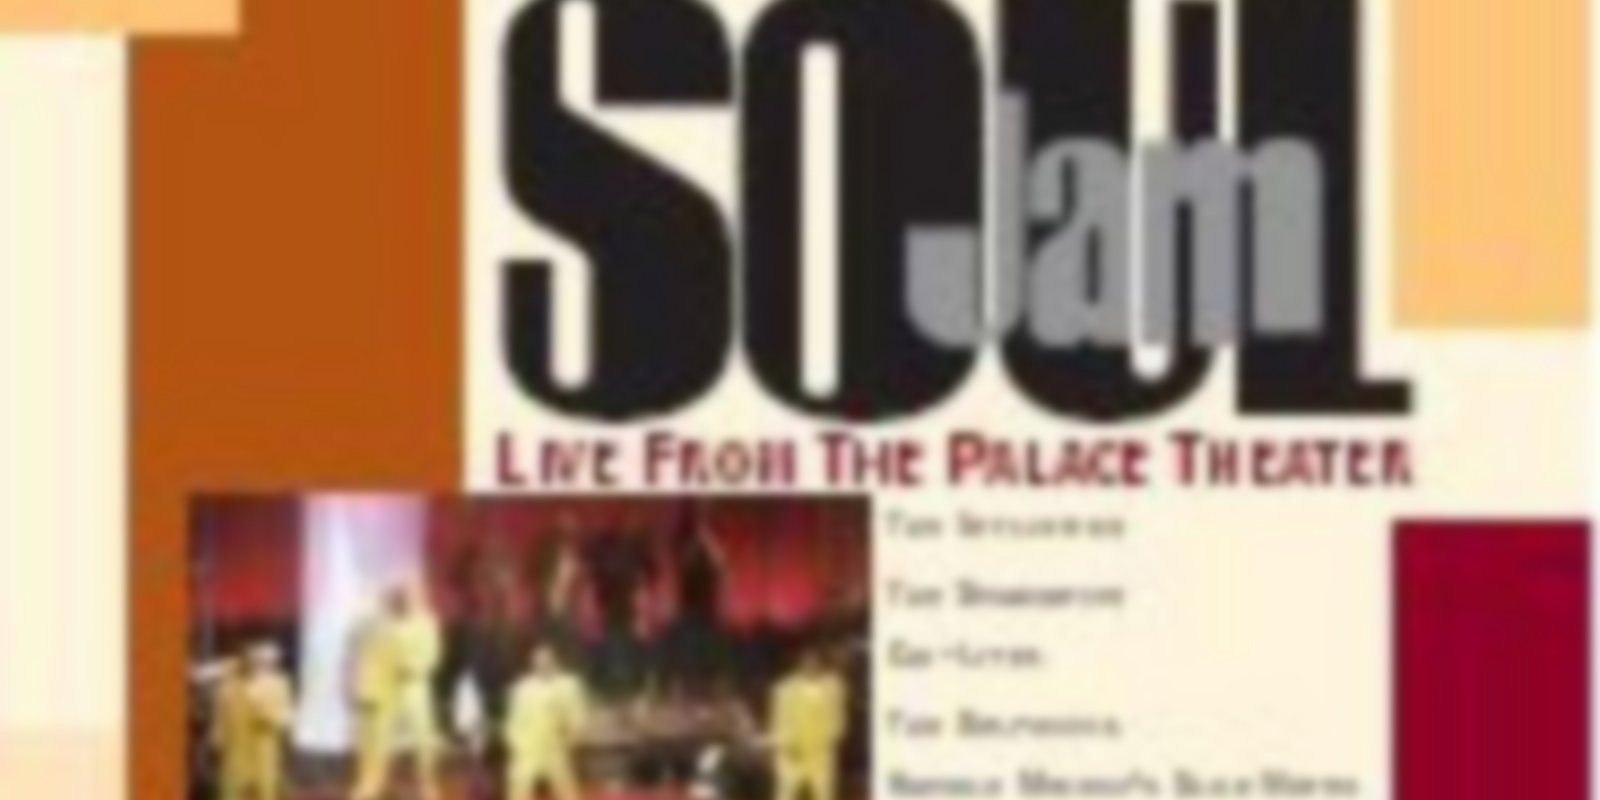 The 70's Soul Jam